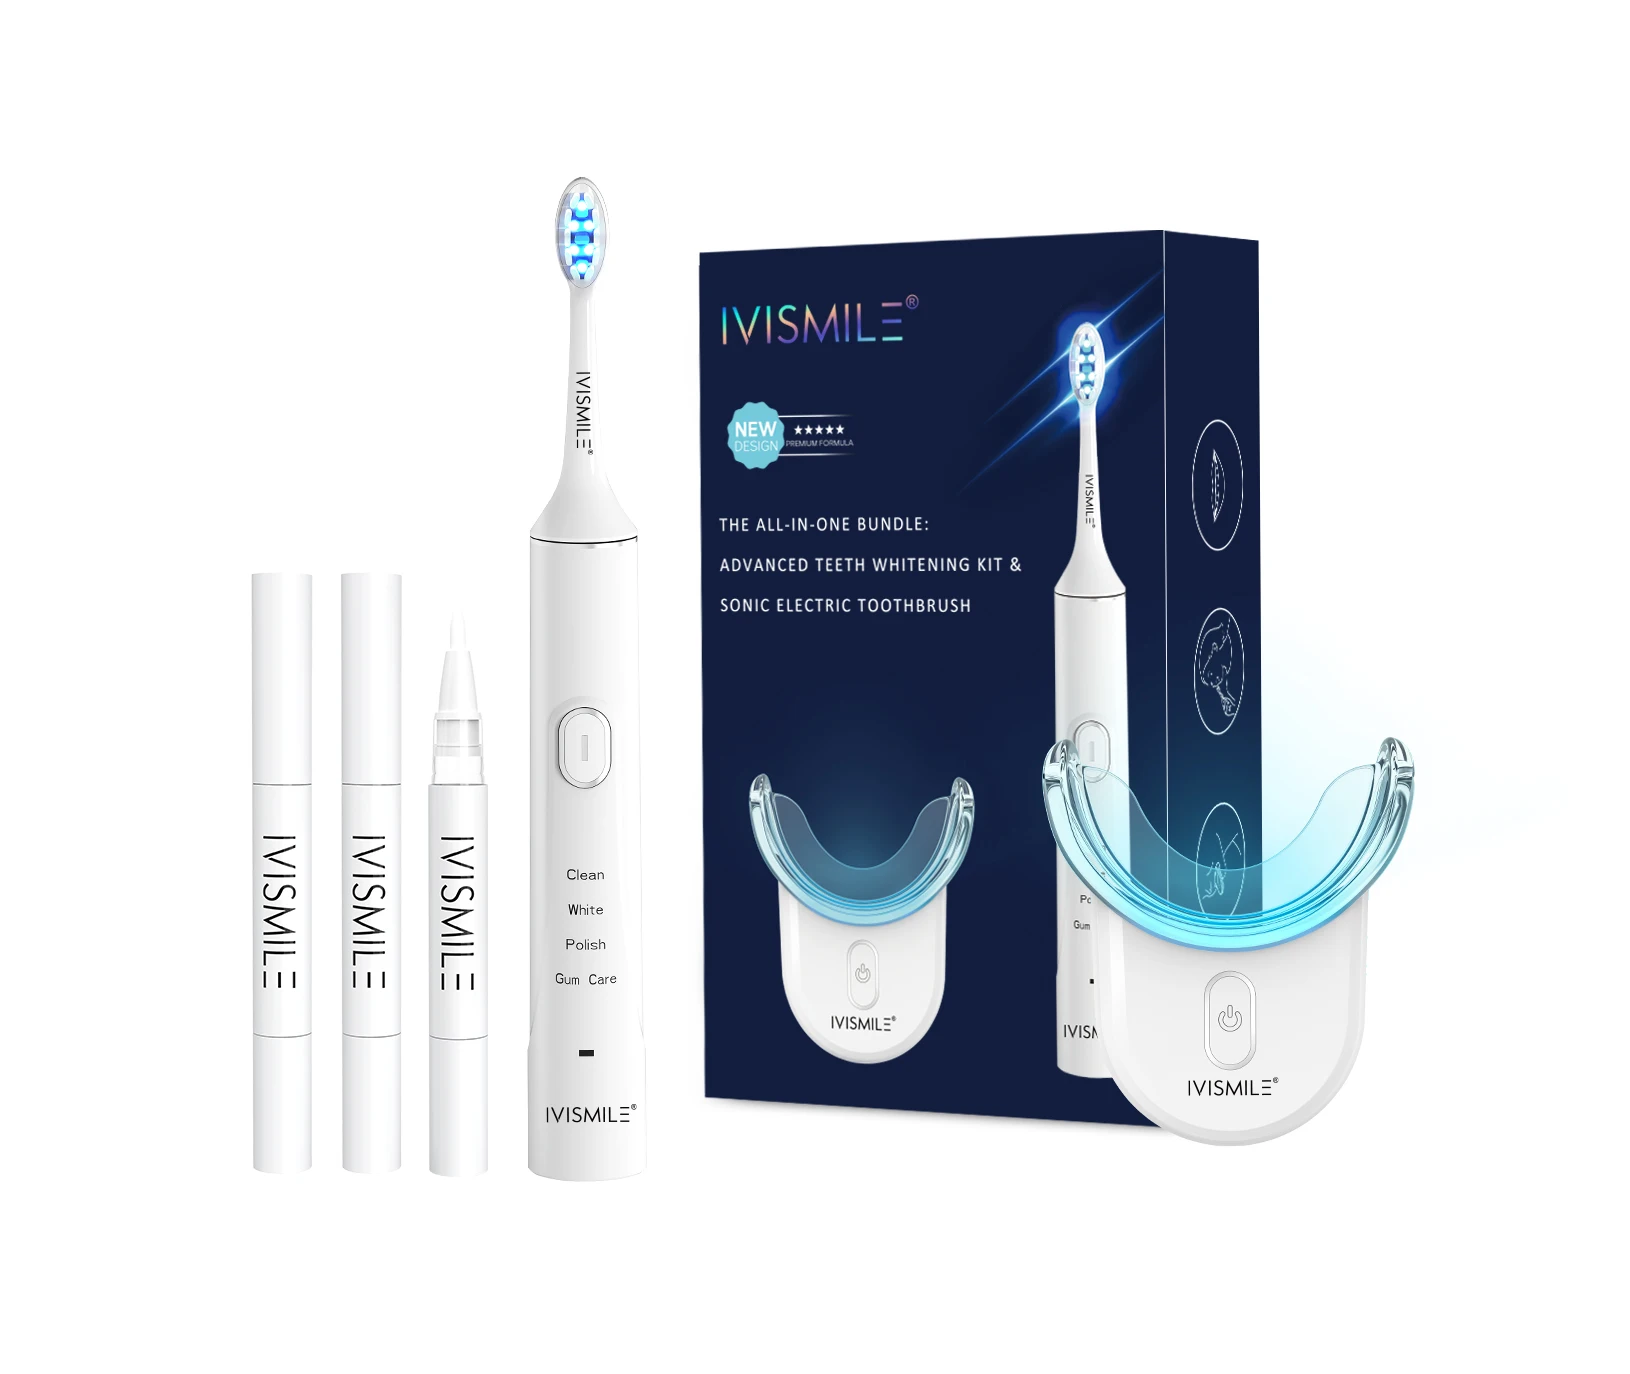 

IVISMILE Whitening Dental Kit Tooth Whitener Accelerator LED Light Home Use Peroxide Gel Pen and Electric Toothbrush in one Kit